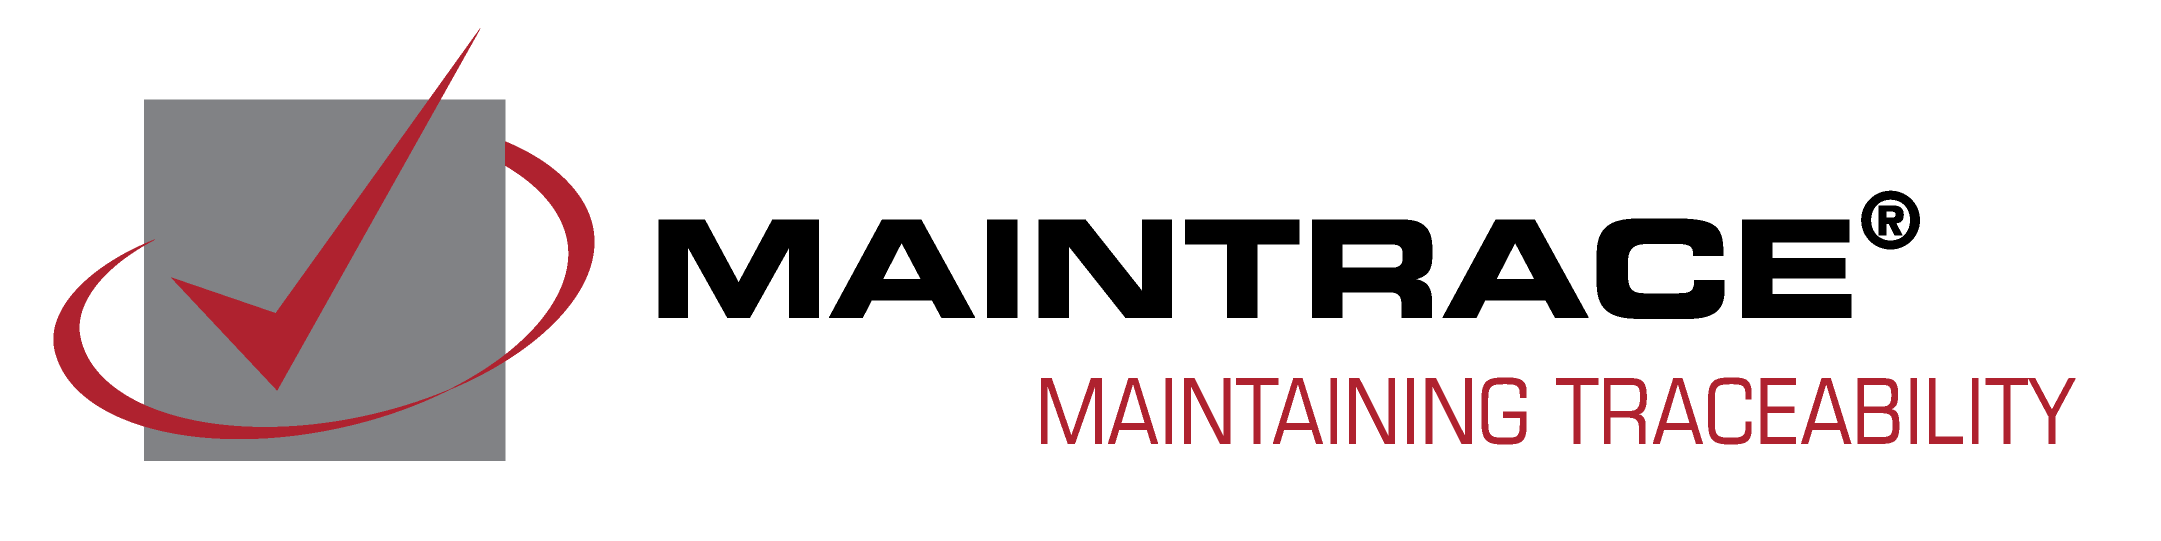 Maintrace - Maintaining Traceability